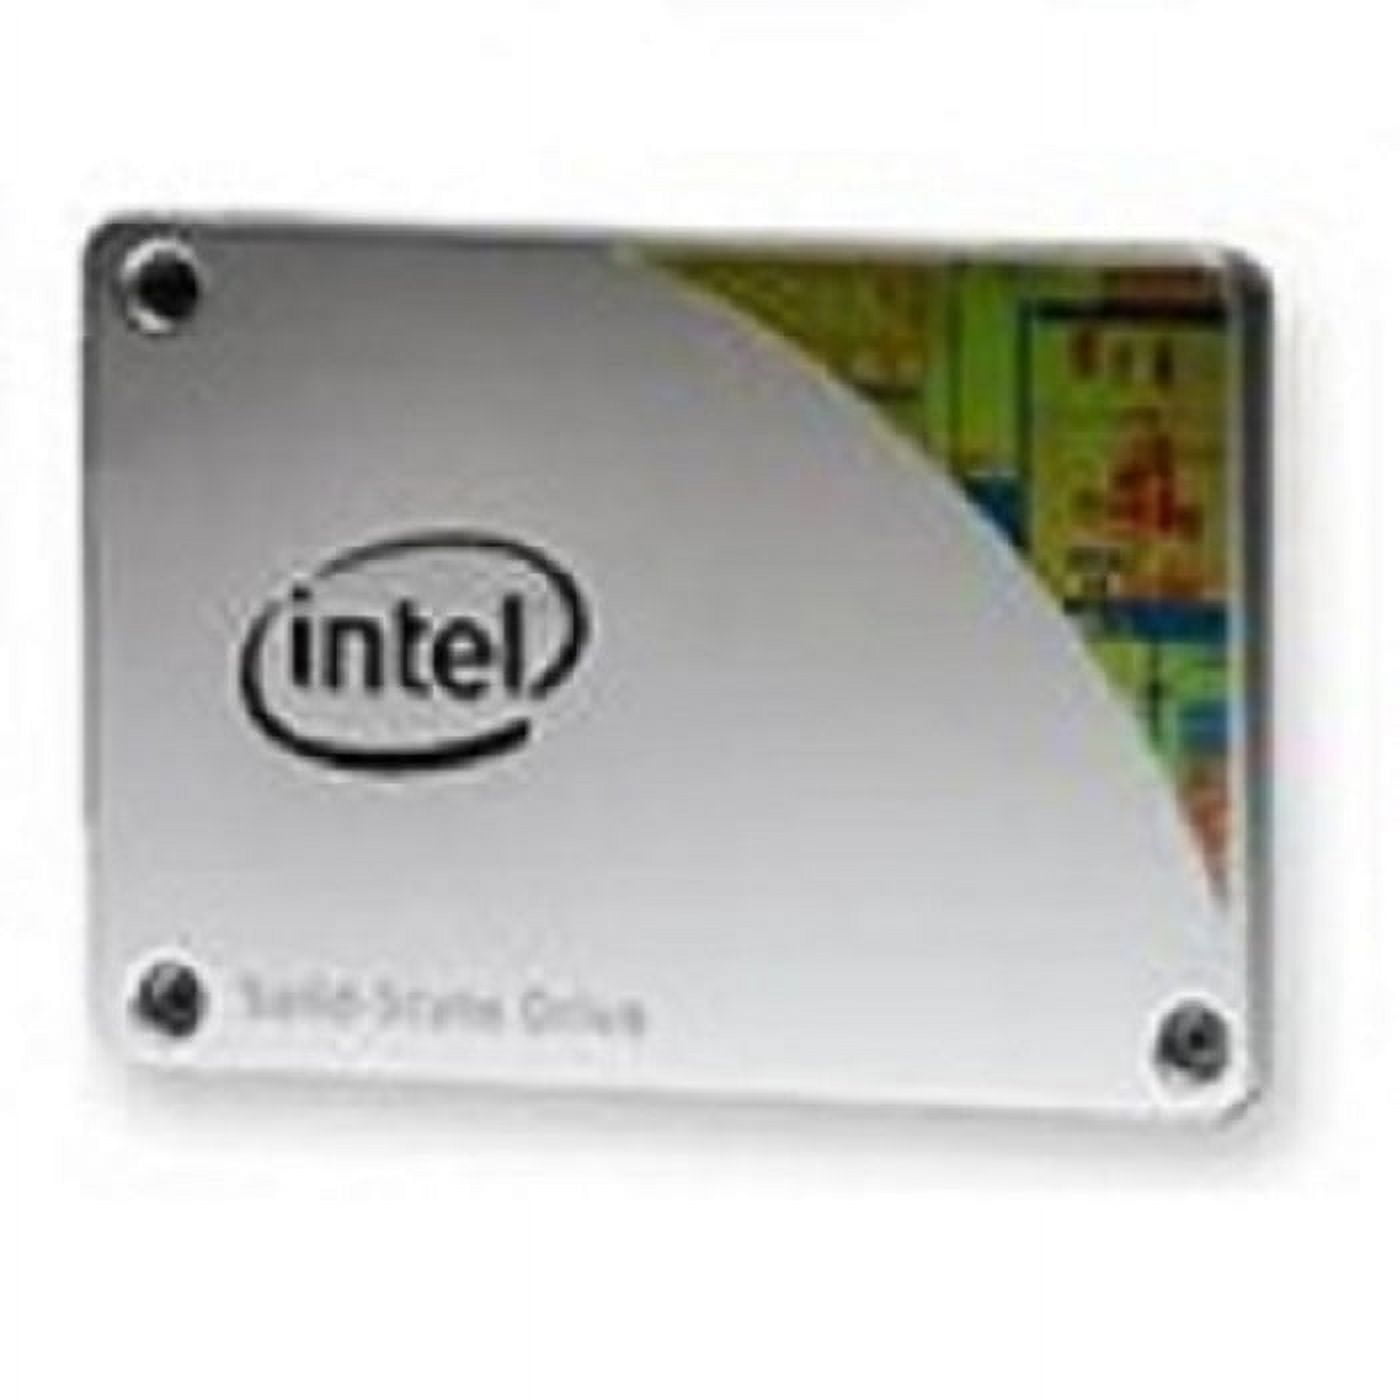 Crucial MX500 500GB 3D NAND SATA 2.5 Inch Internal SSD, up to 560 MB/s -  CT500MX500SSD1 